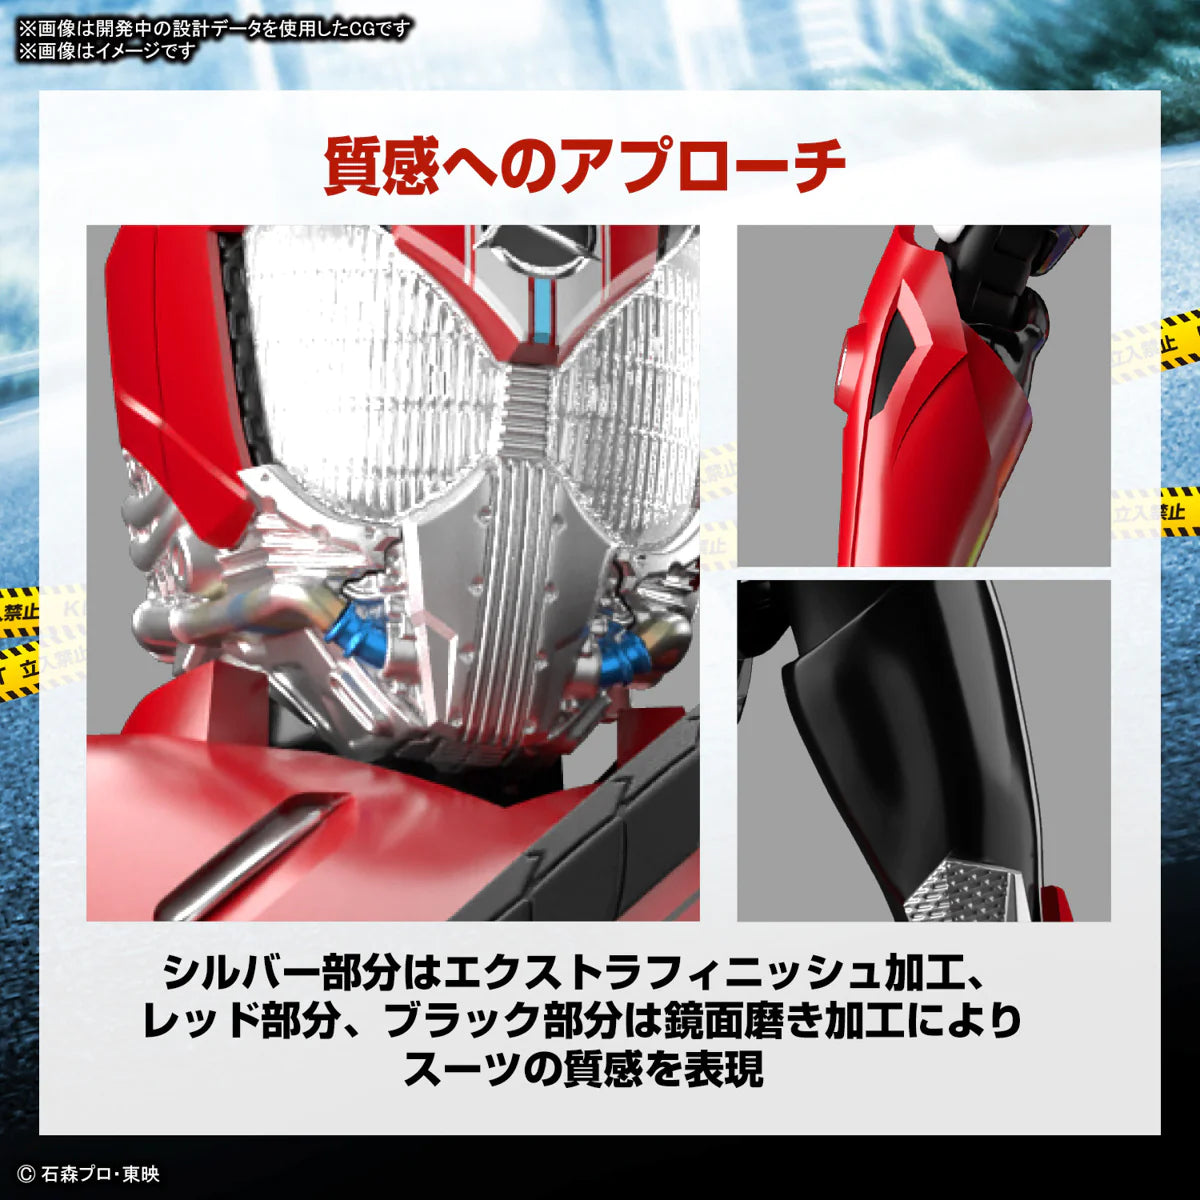 Model Kit: FIGURE-RISE STANDARD - Kamen Rider Drive Type Speed